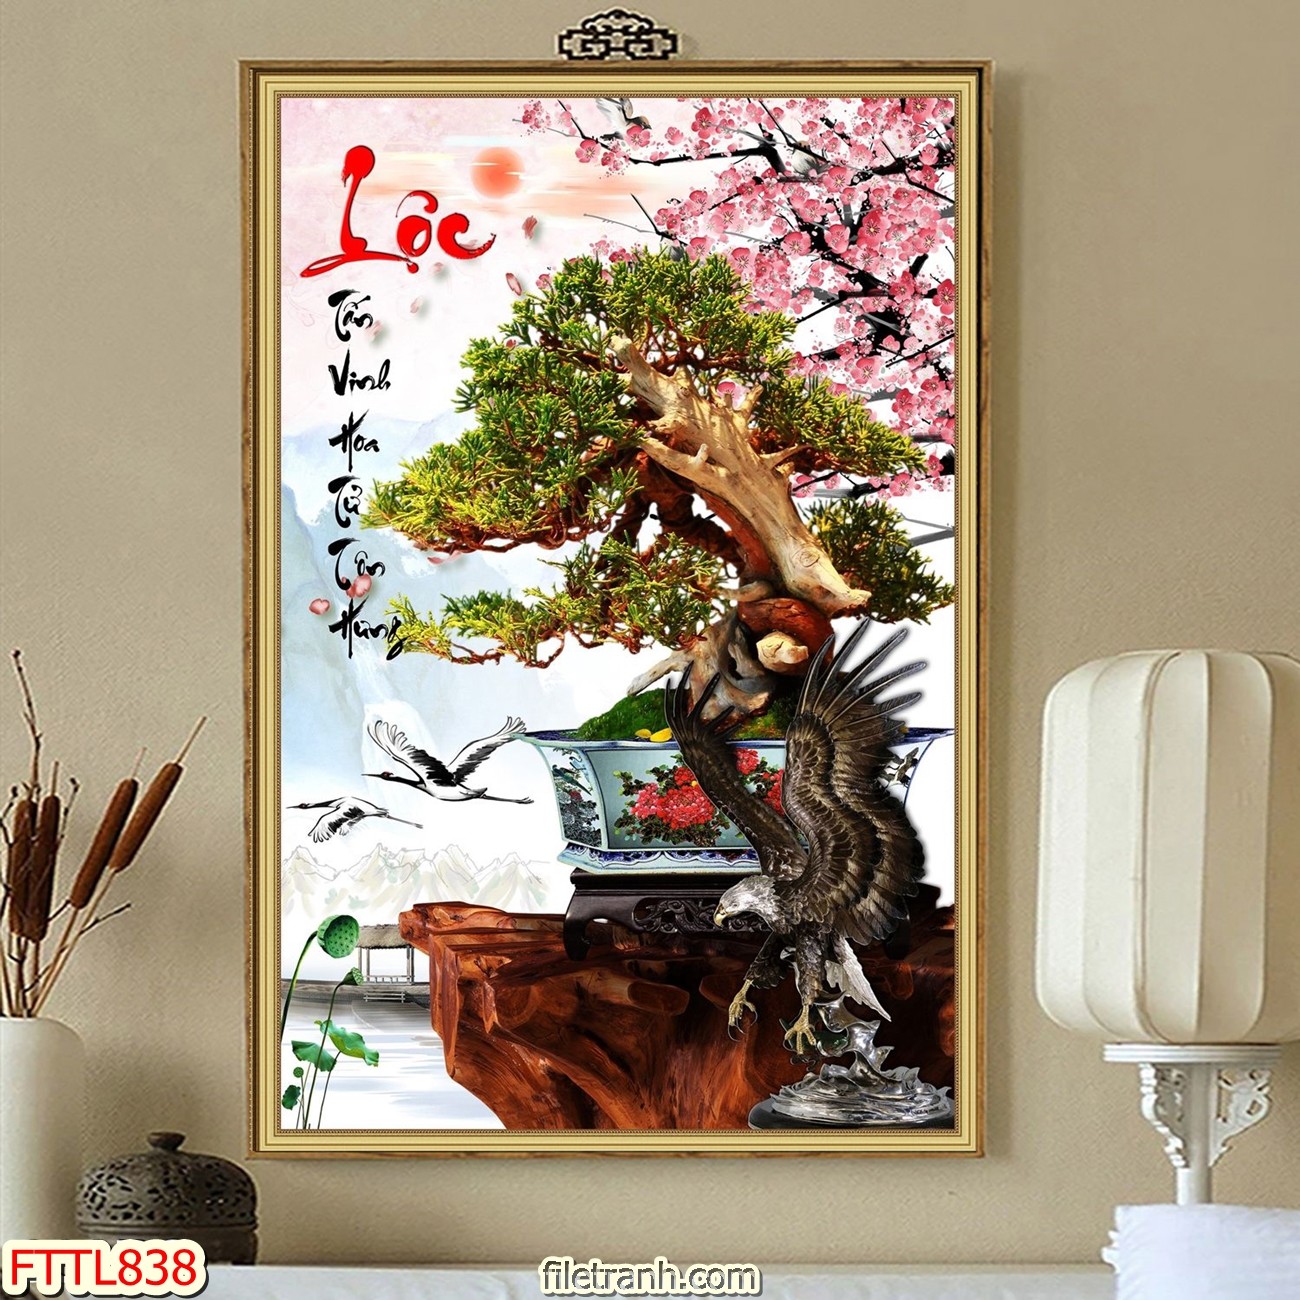 https://filetranh.com/file-tranh-chau-mai-bonsai/file-tranh-chau-mai-bonsai-fttl838.html